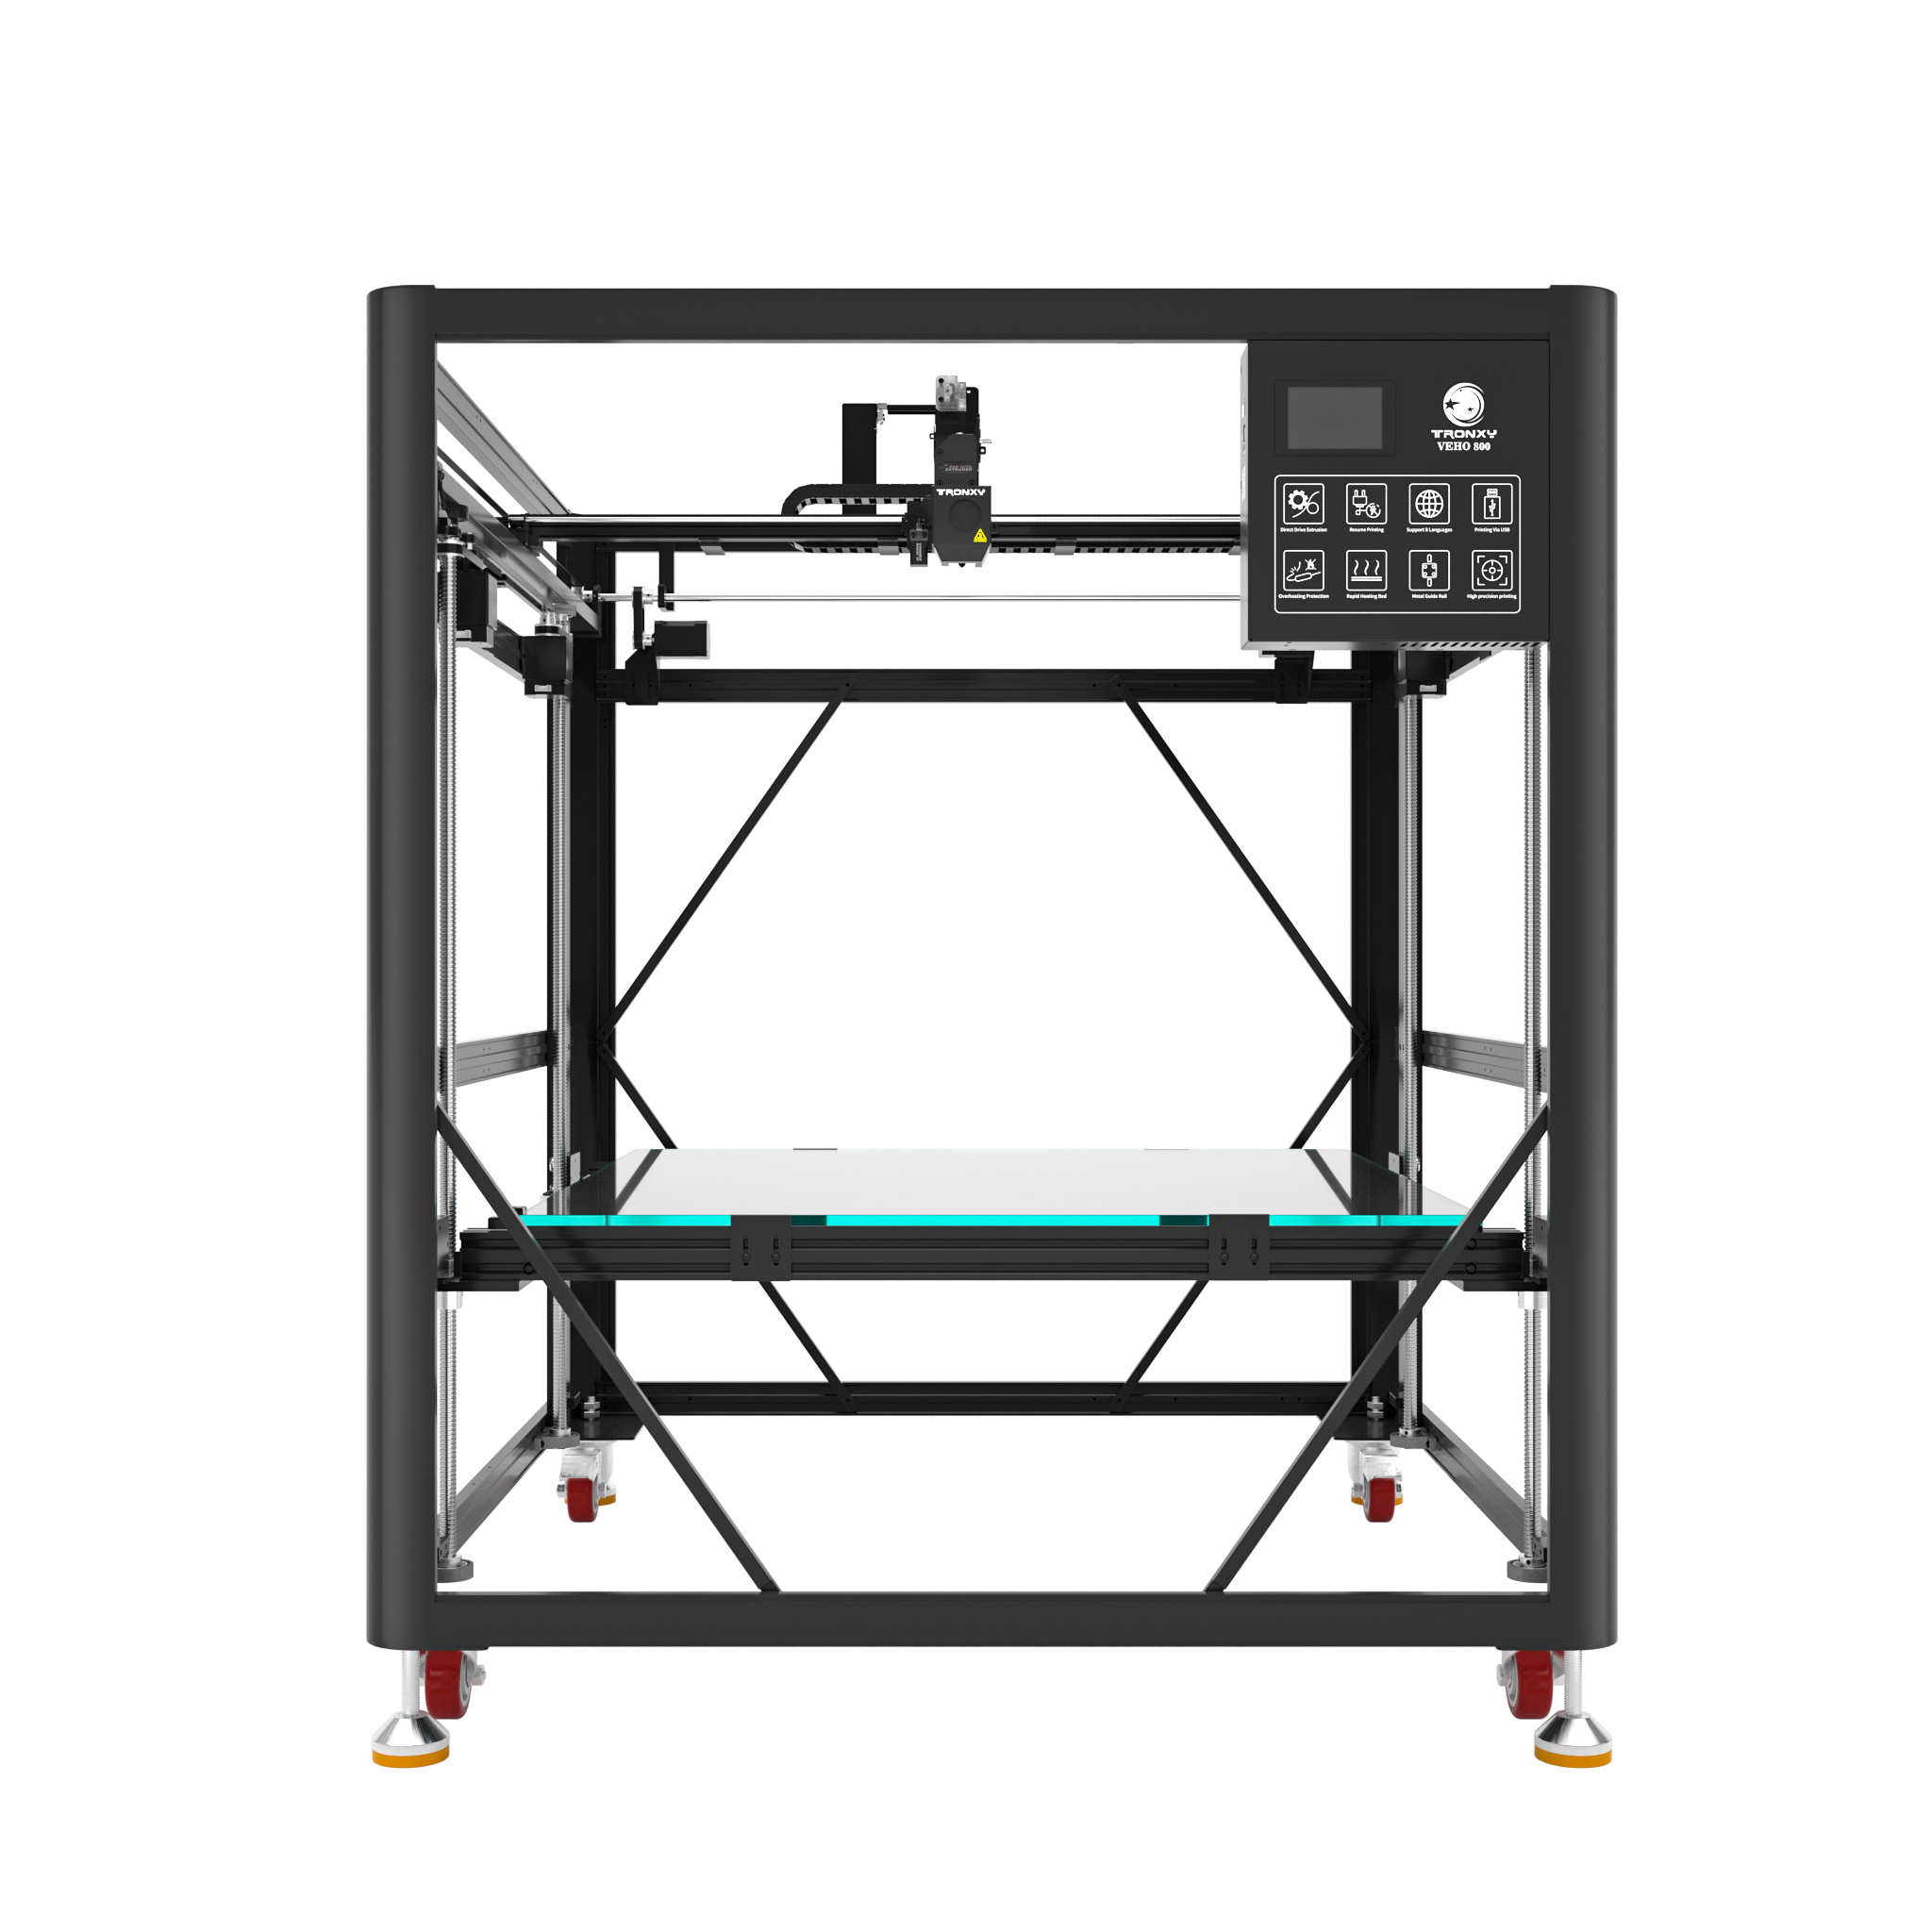 VEHO-1000-16 Direct Drive 3D Printer Large 3D Printer 1000*1000*1600mm